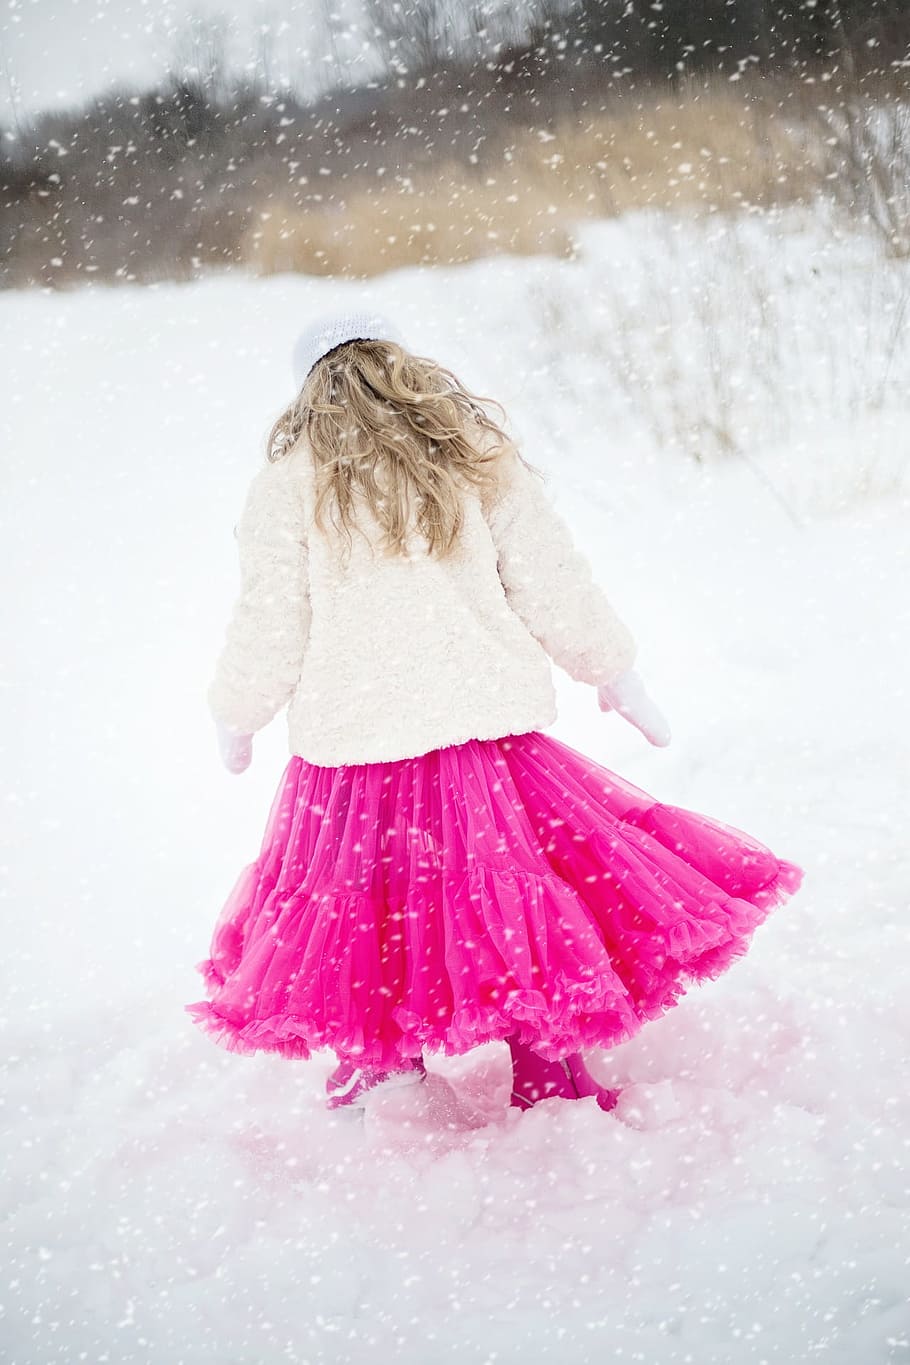 ice, snow, winter, frozen, little, girl, blonde, princess, one person, cold temperature